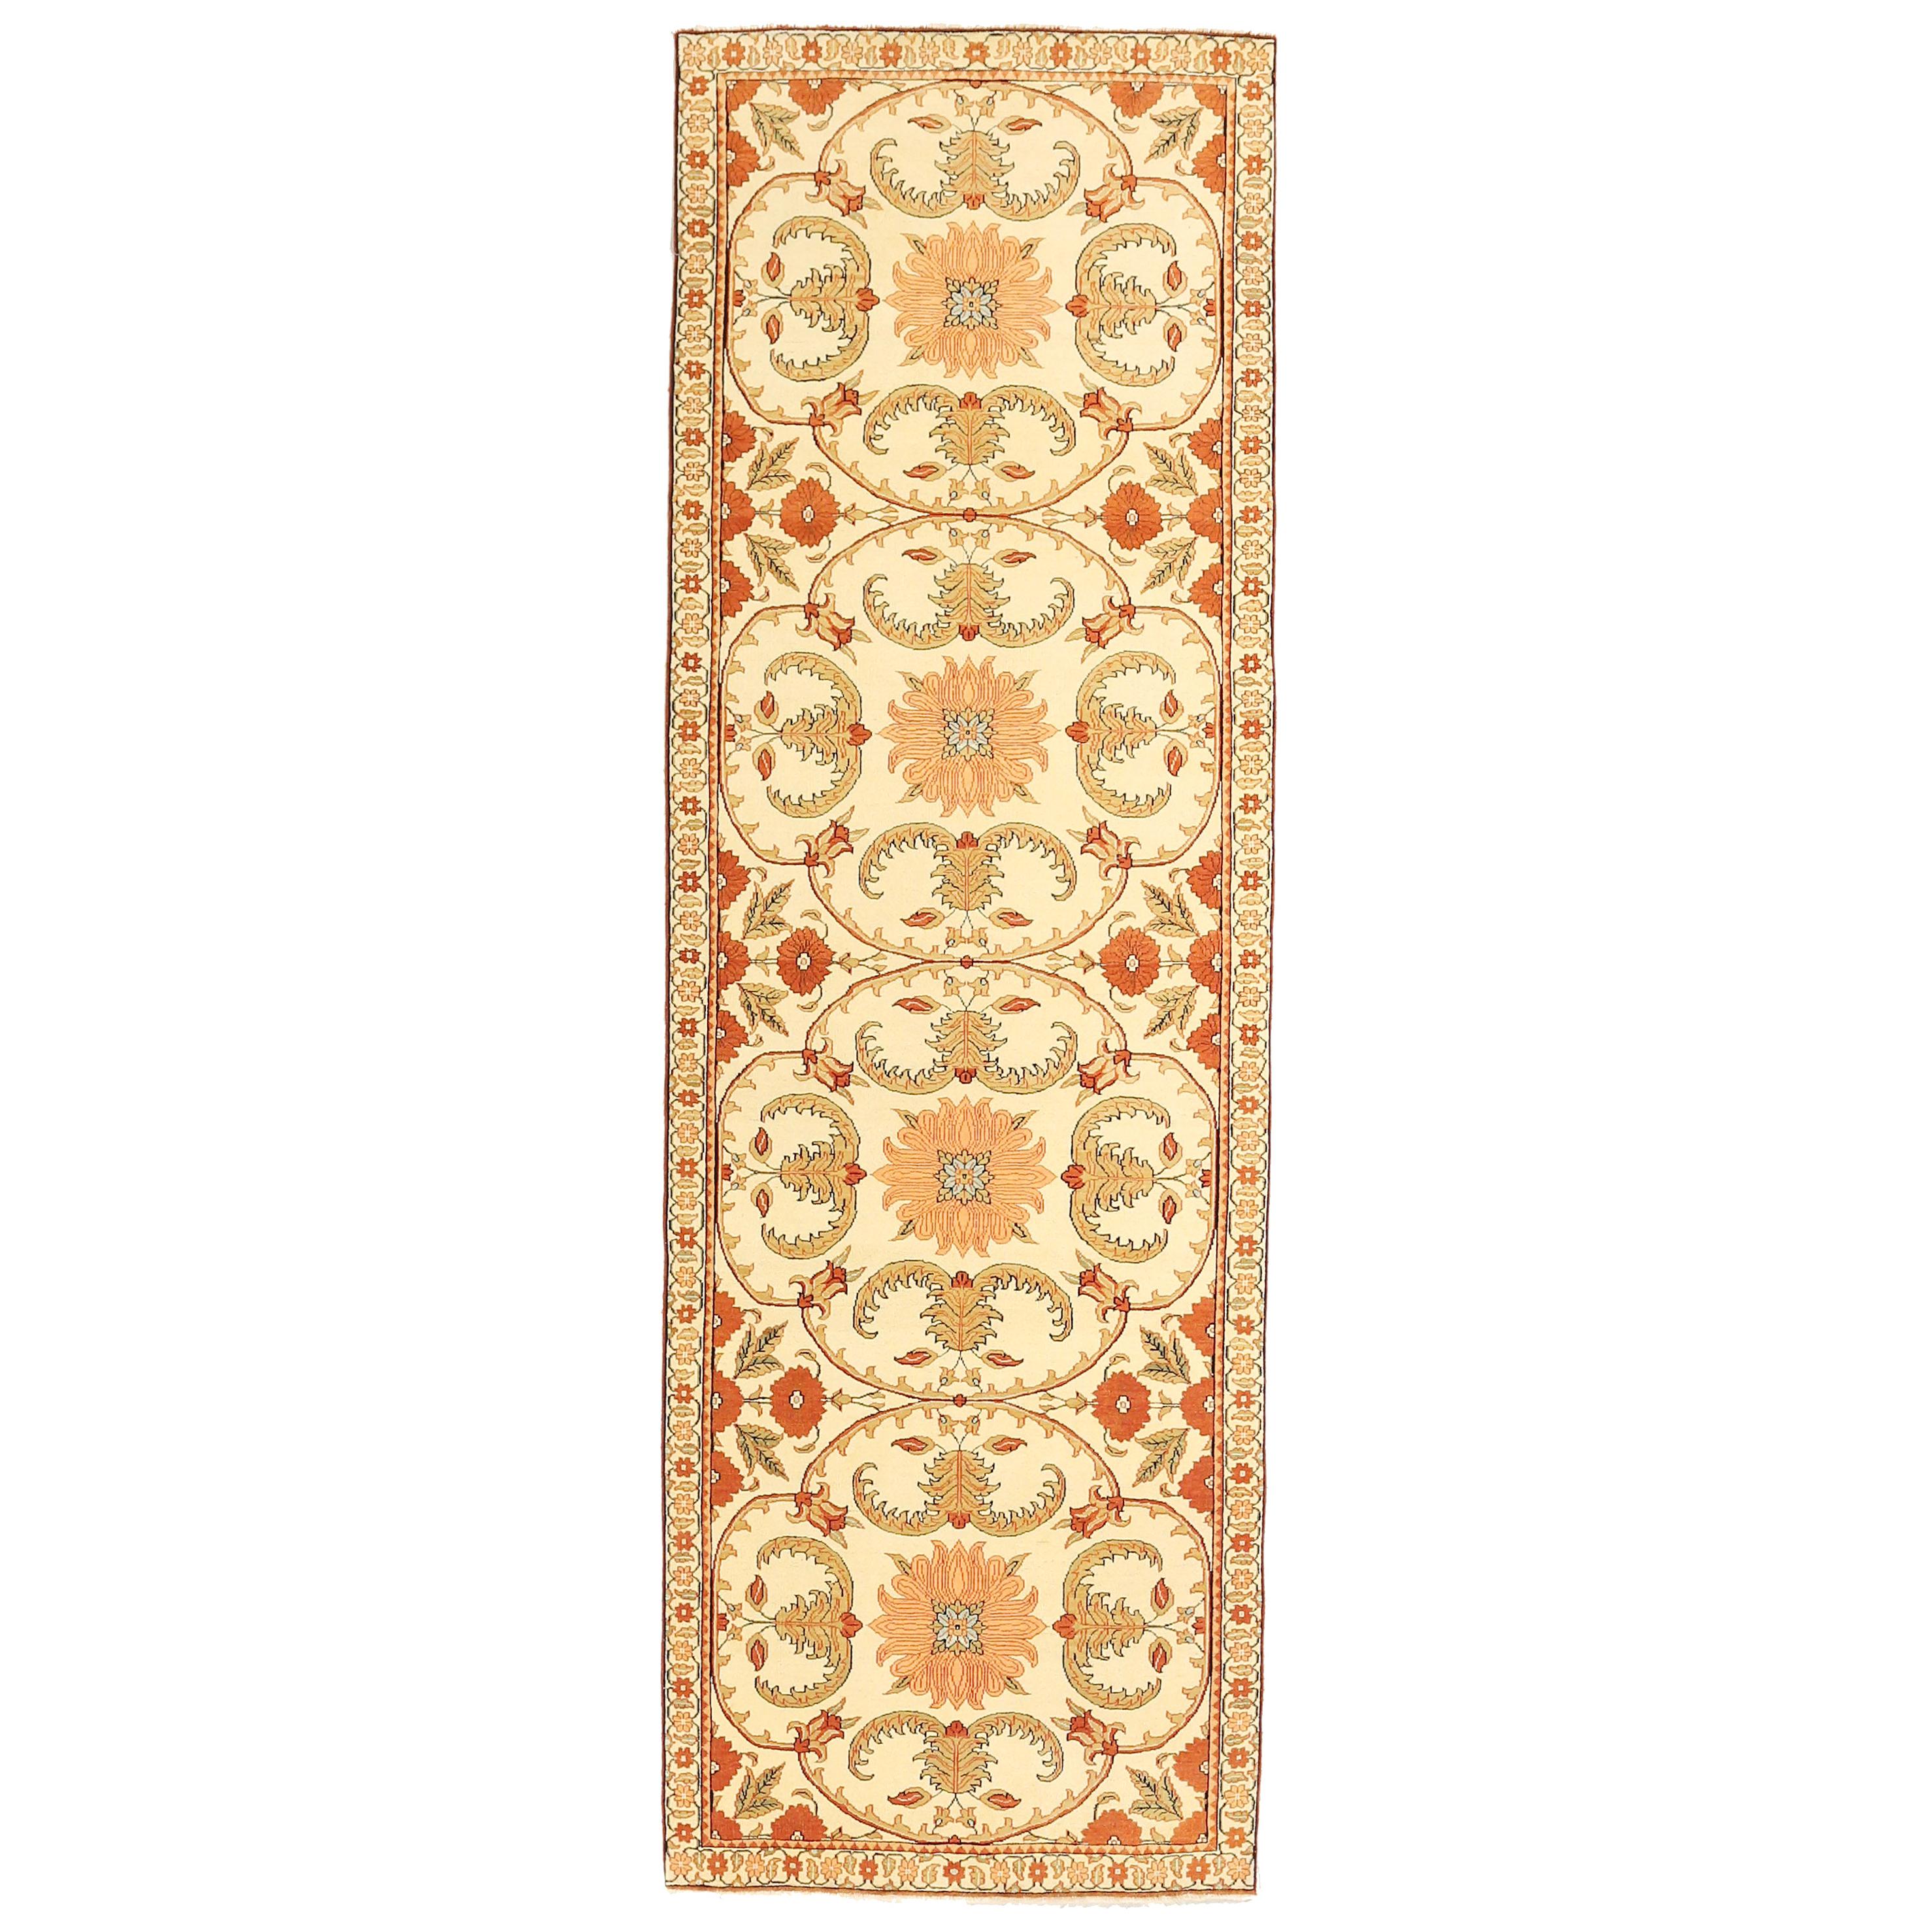 Antique Turkish Agra Runner Rug with Beige & Orange Botanical Details